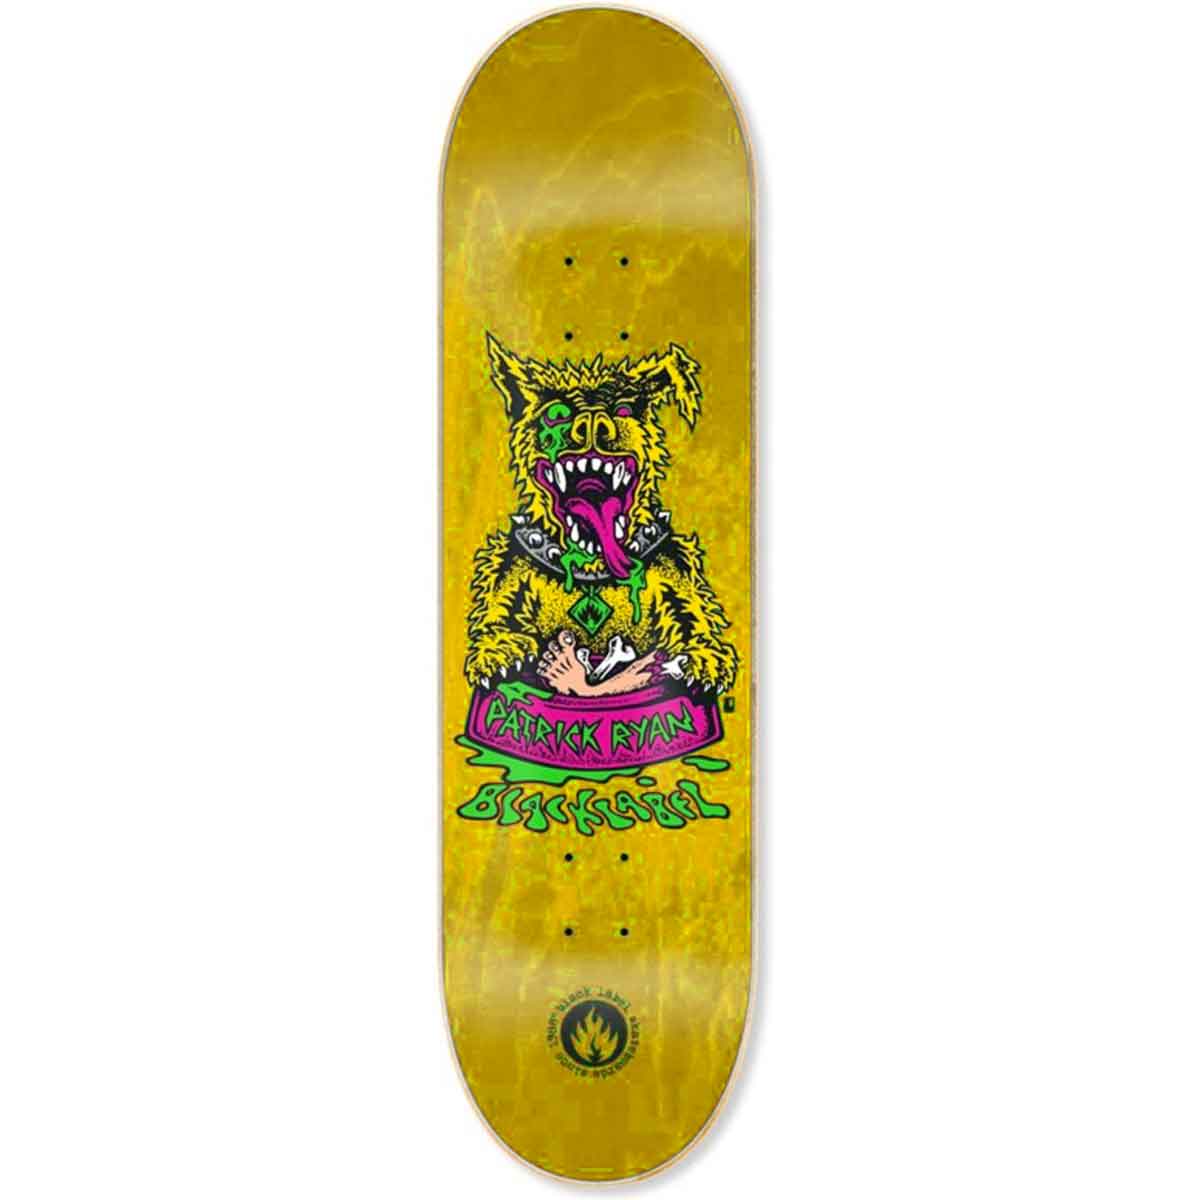 Correctie Verward zijn typist Black Label Patrick Ryan Sick Dog Skateboard Deck - Yellow Stain 8.25x32.12  | SoCal Skateshop